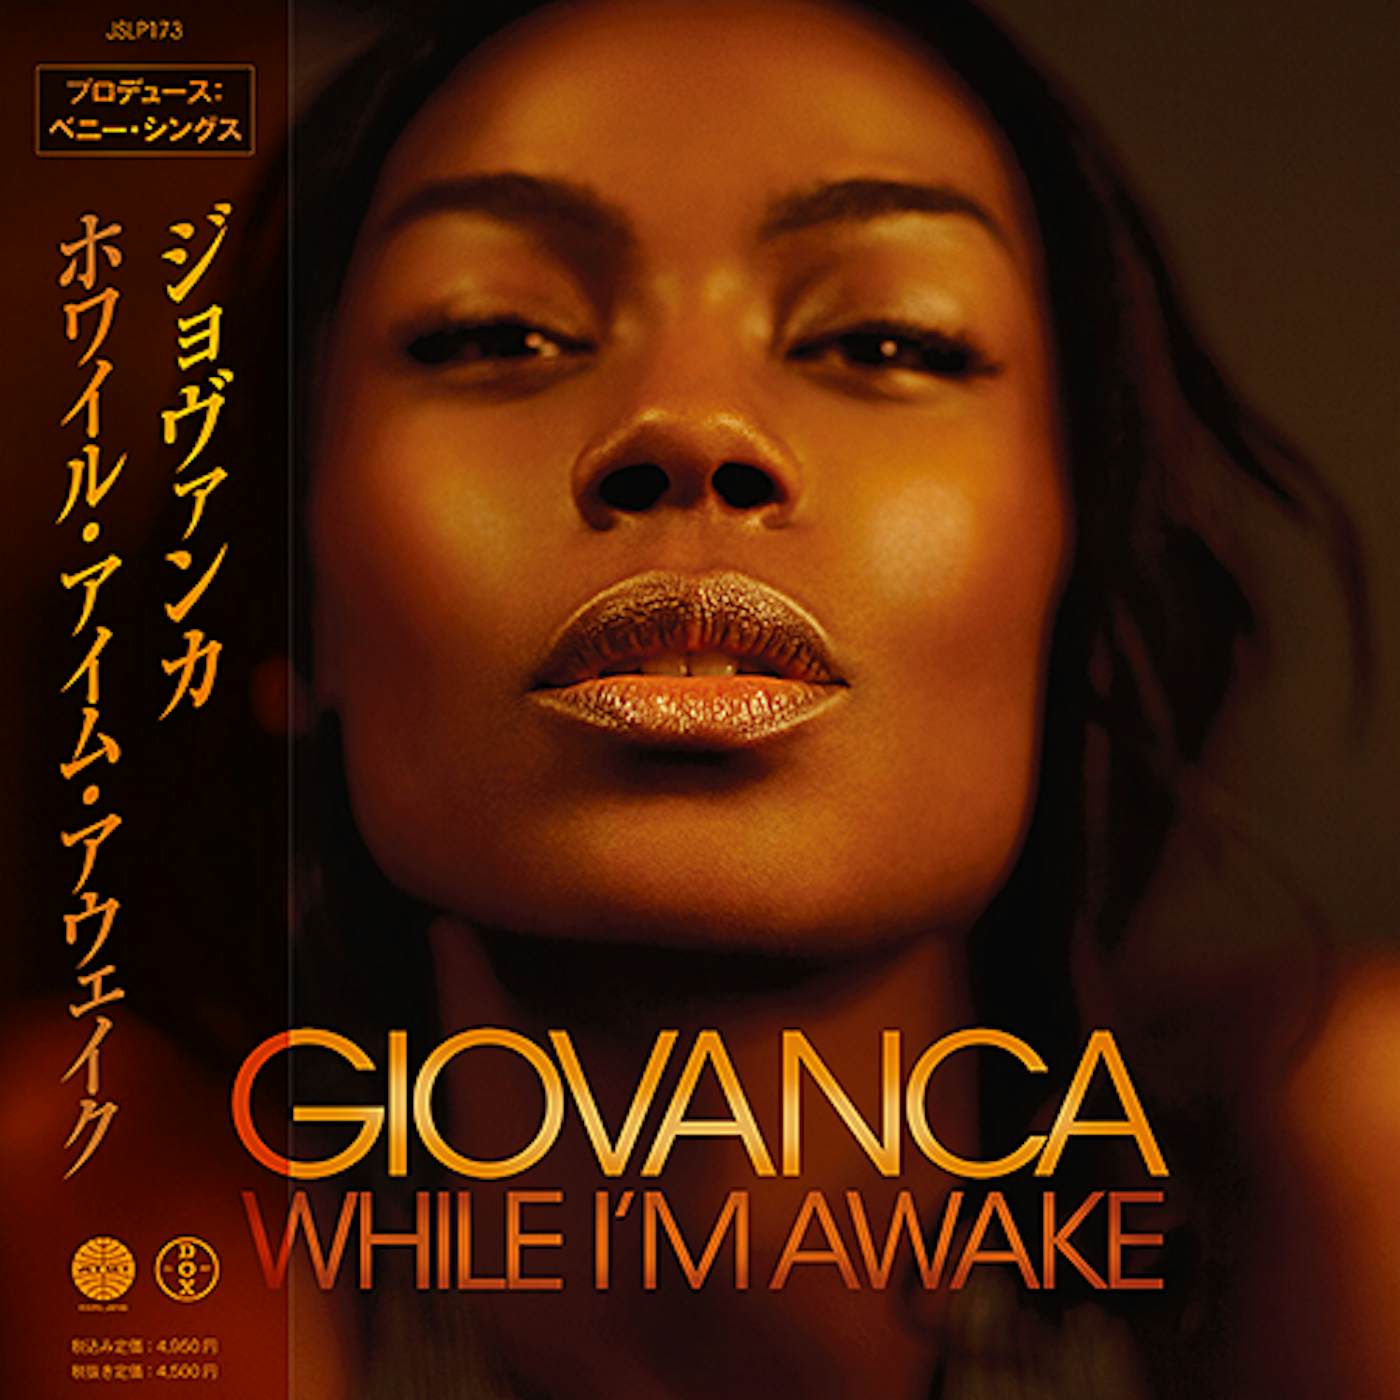 Giovanca While I'm Awake  Japanese Import  Inser Vinyl Record